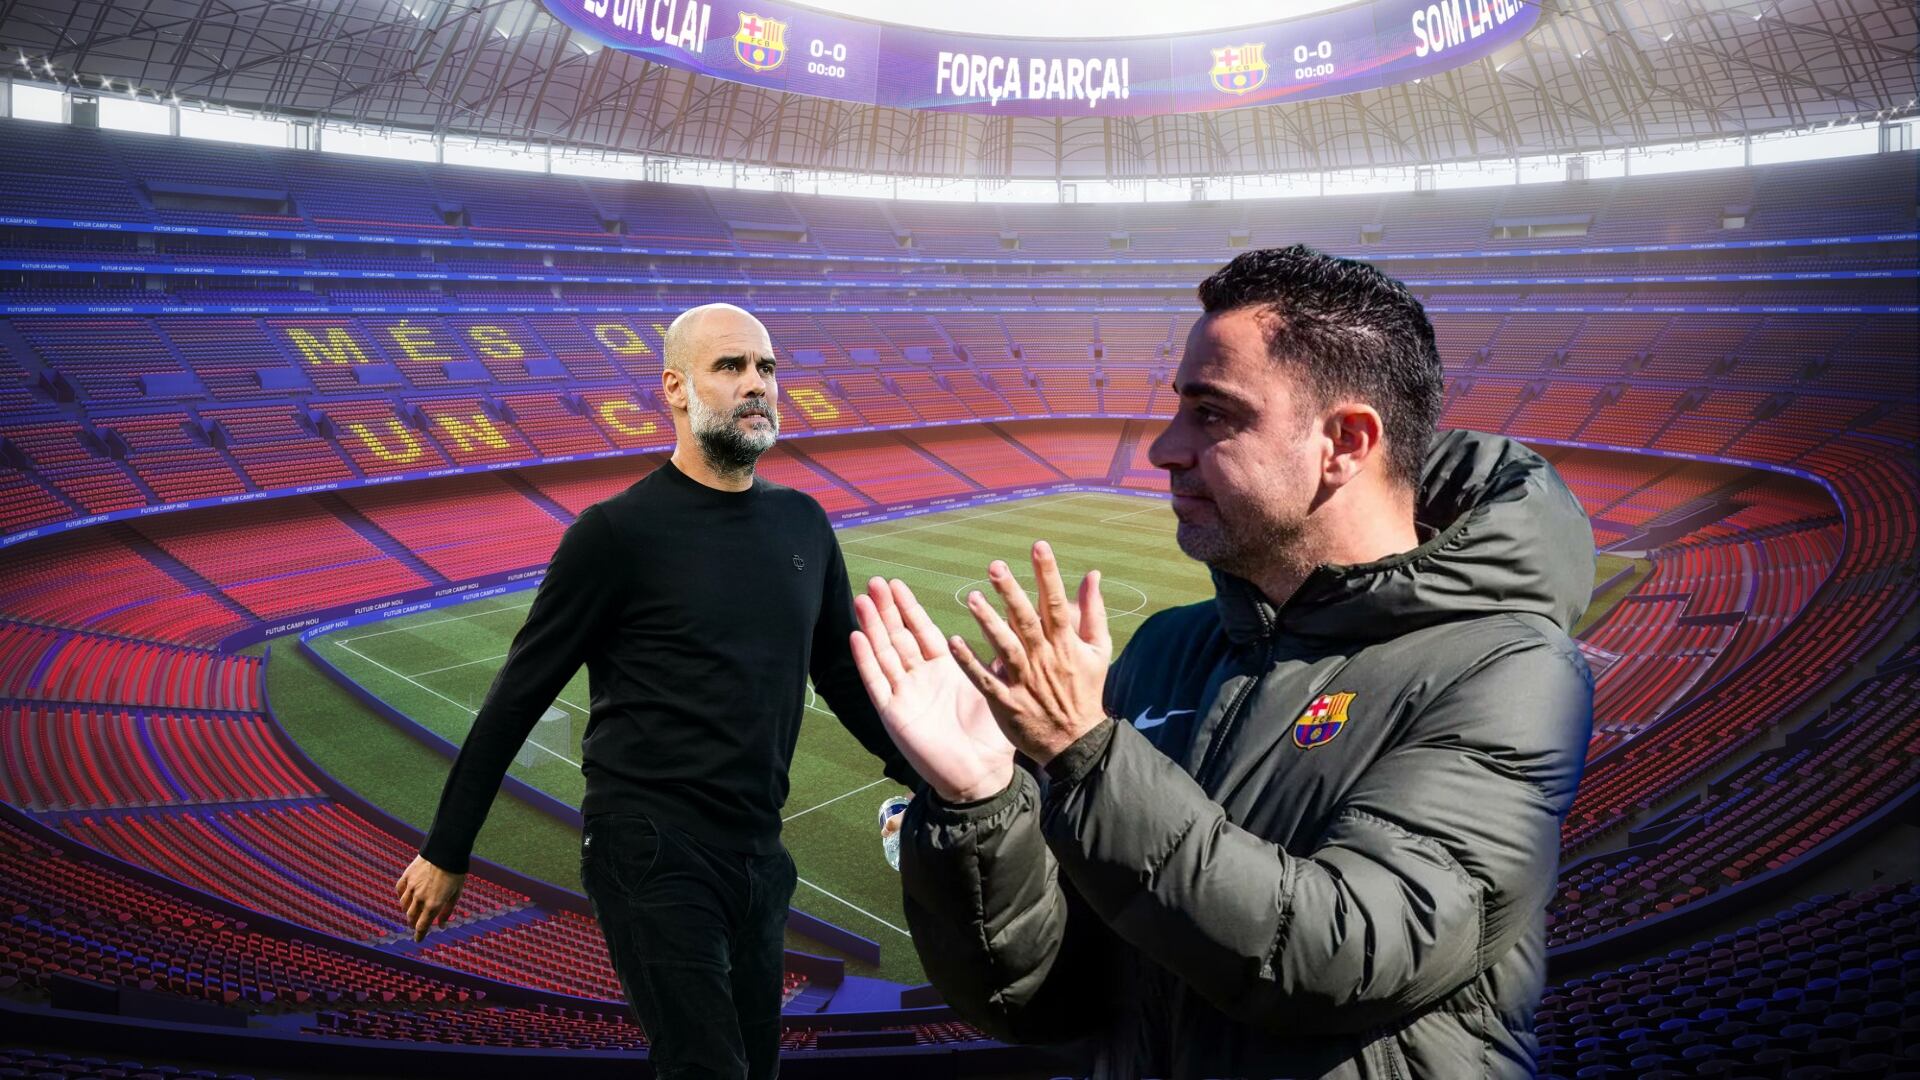 Barcelona's secret plan with Xavi that involves Guardiola and has Man City aware